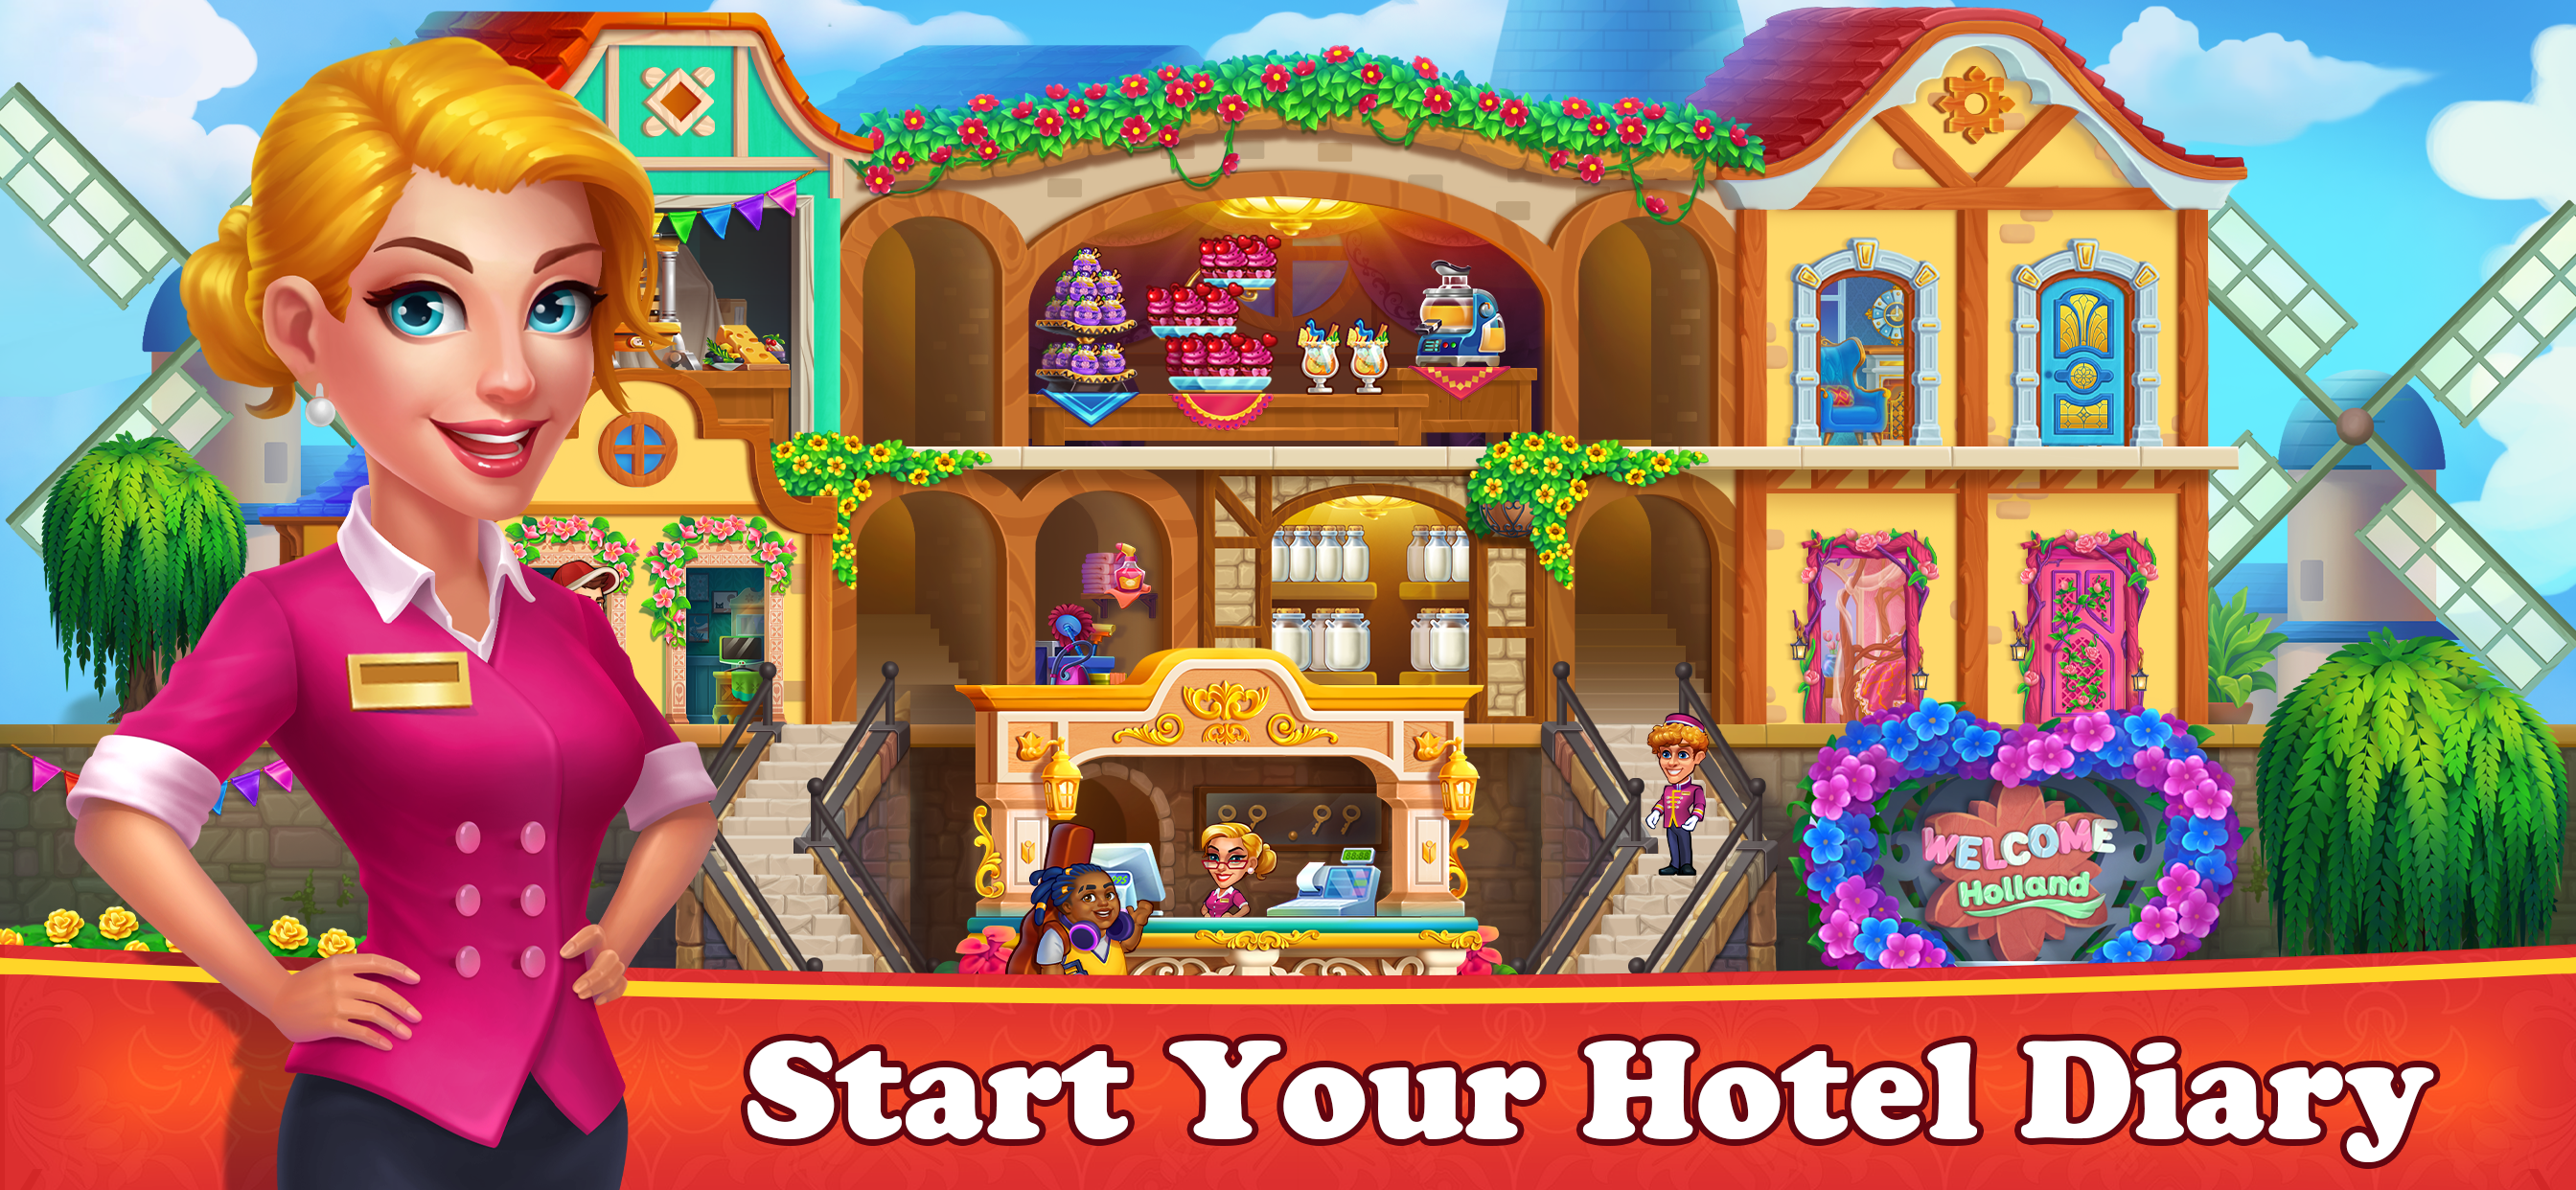 Screenshot 1 of Hotel Diary - เกมโรงแรม, เกมทำอาหารในโรงแรม 1.4.7